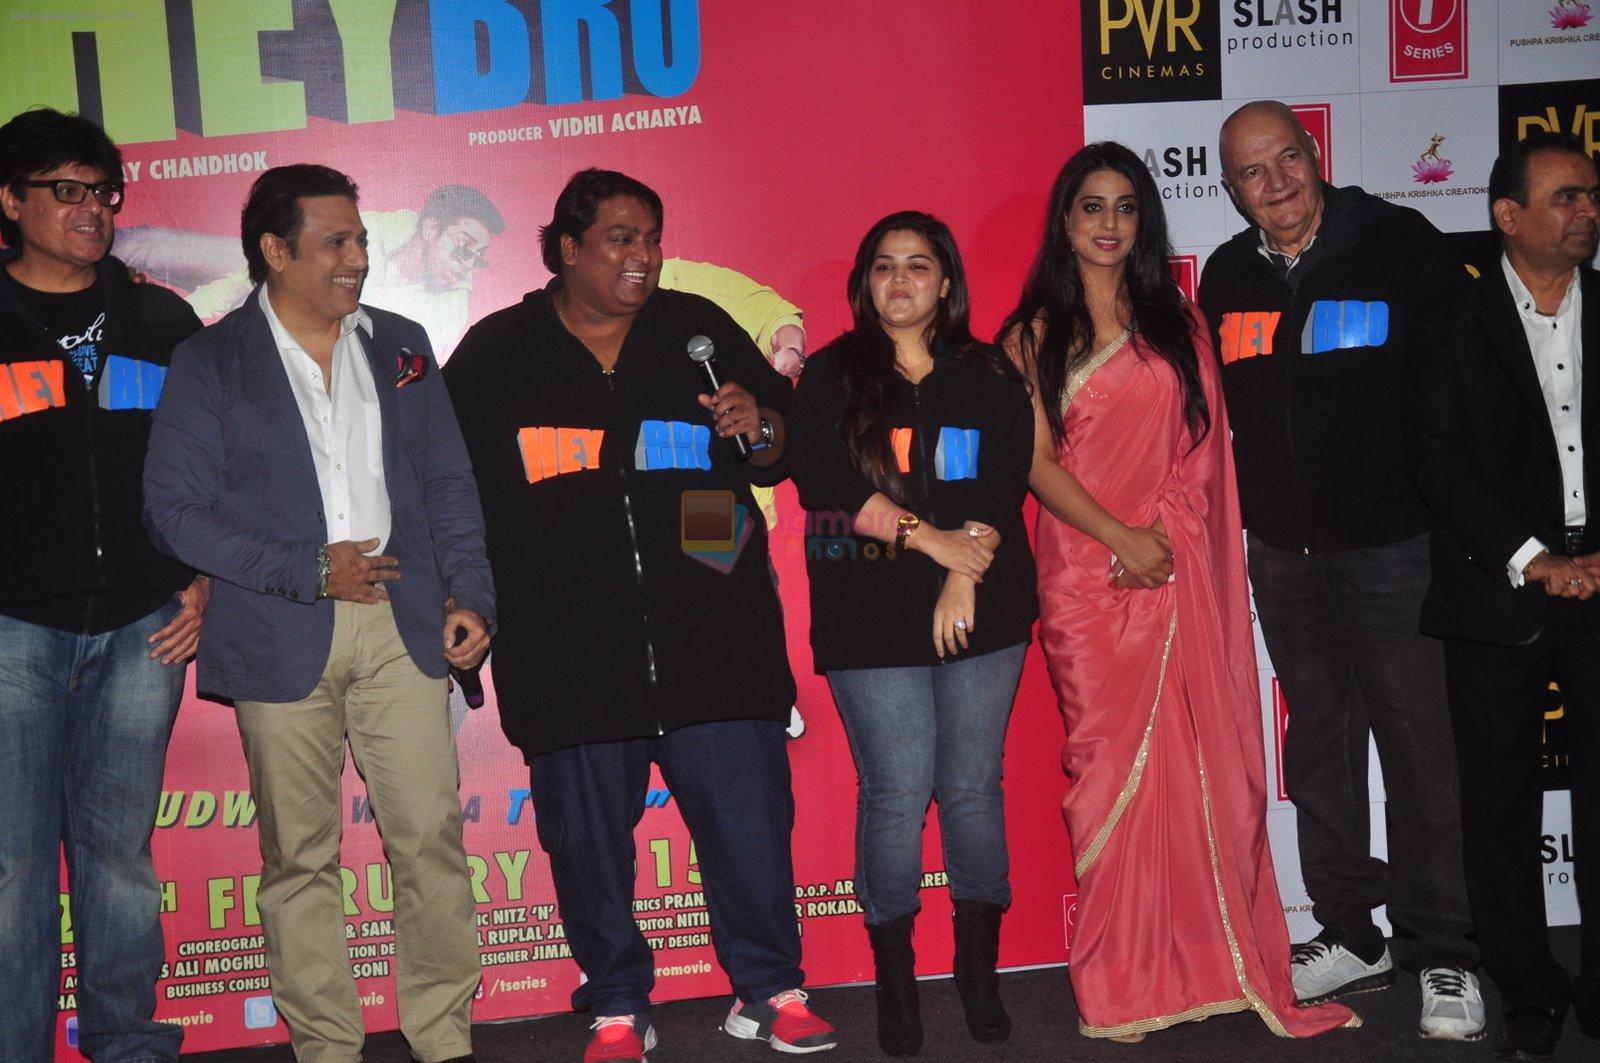 Govinda, Ganesh Acharya, Mahi Gill, Prem Chopra at Hey Bro launch in PVR on 15th Jan 2015